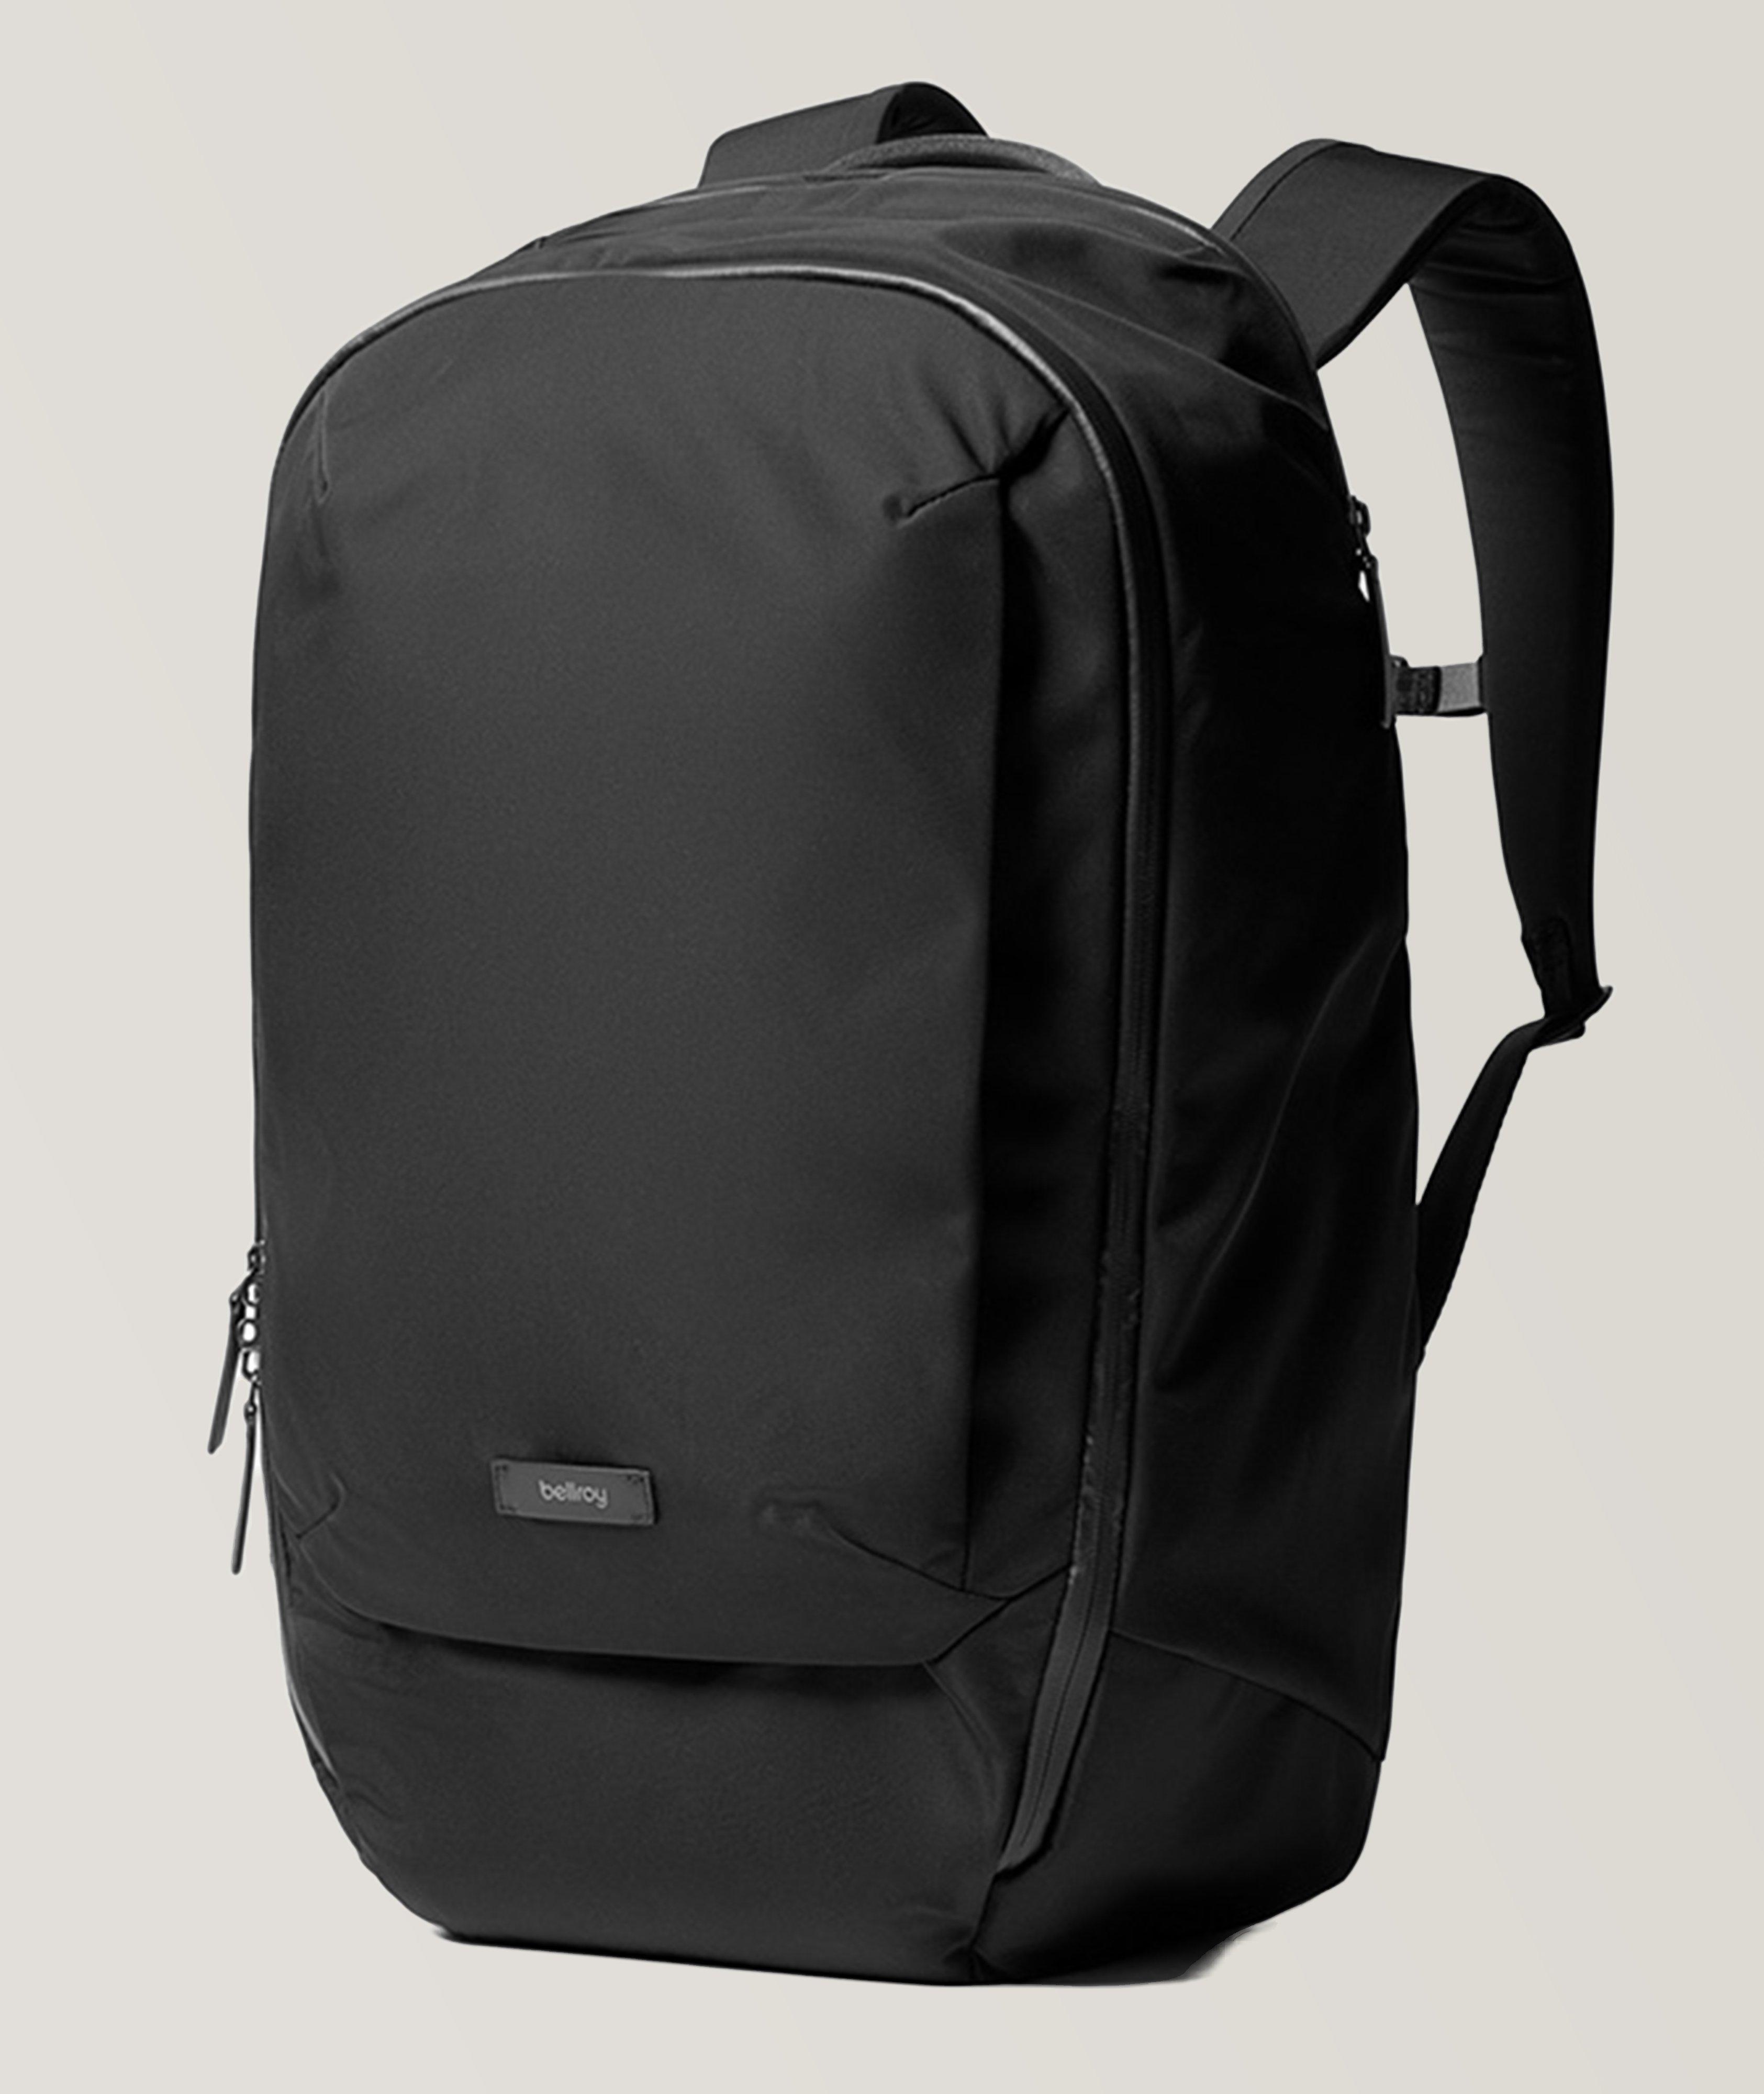 Transit Backpack Plus image 0